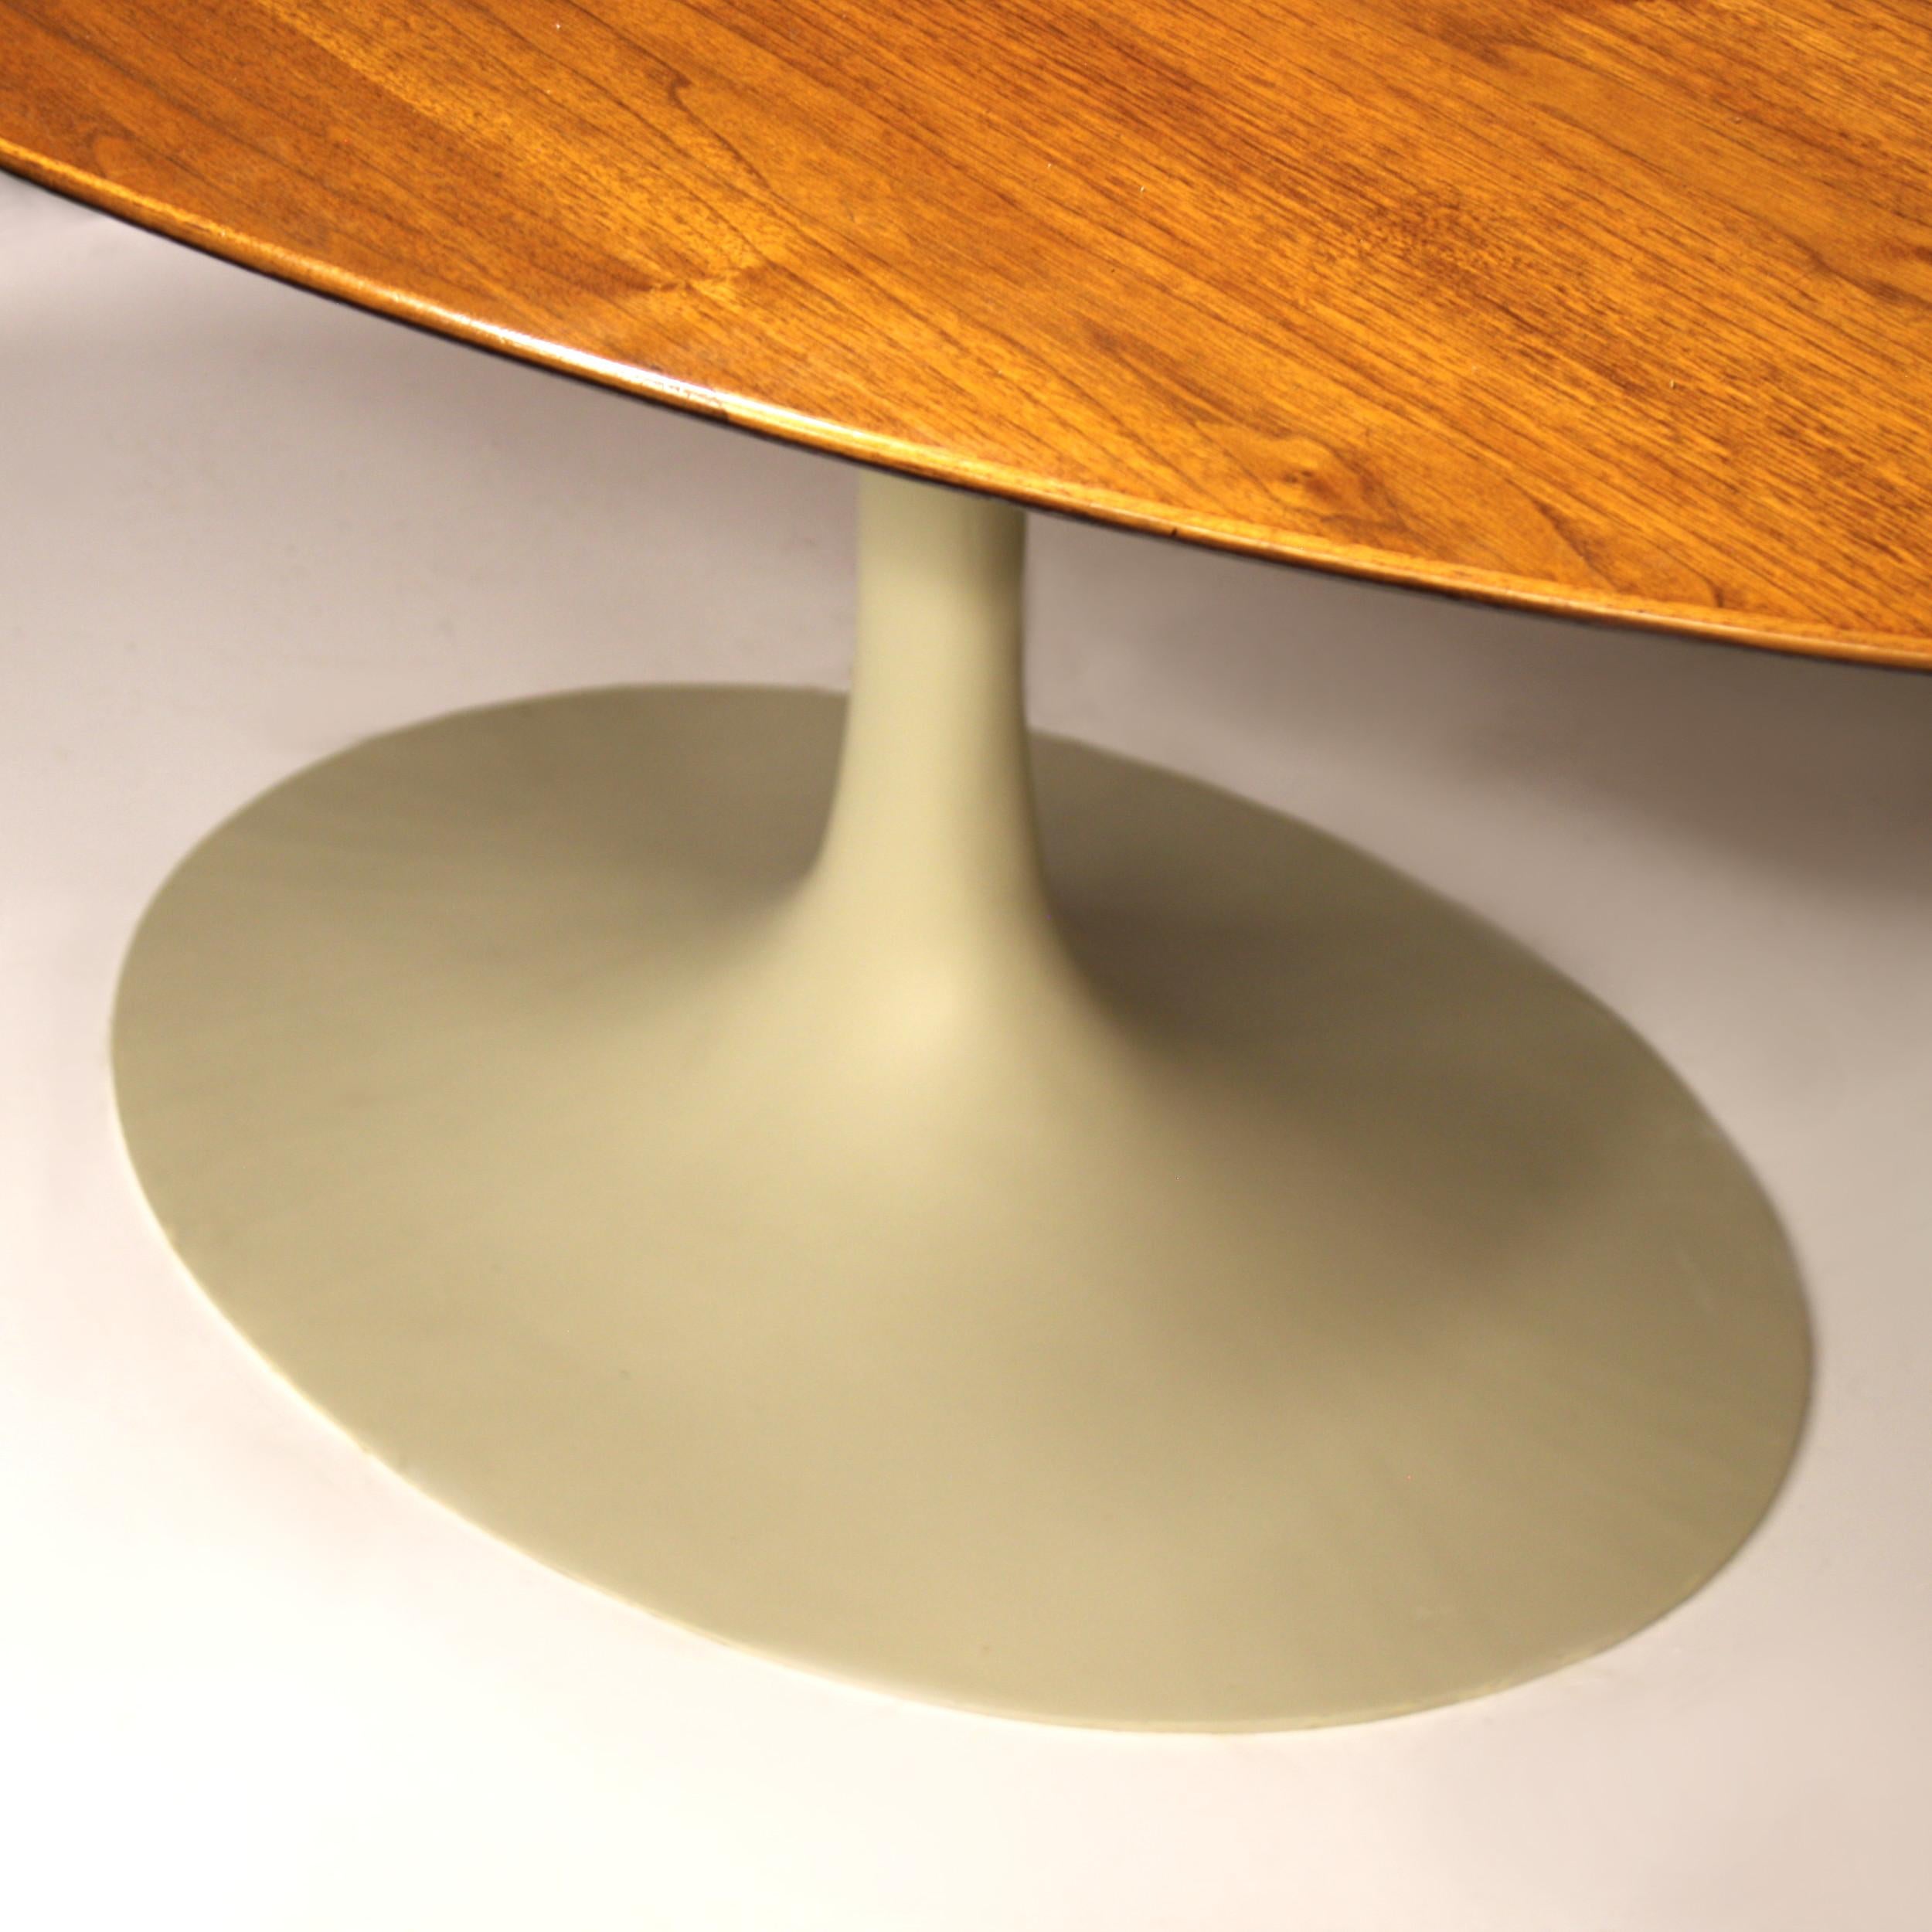 Cast Original 1970 Oval Walnut Top Tulip Dining Table by Eero Saarinen for Knoll